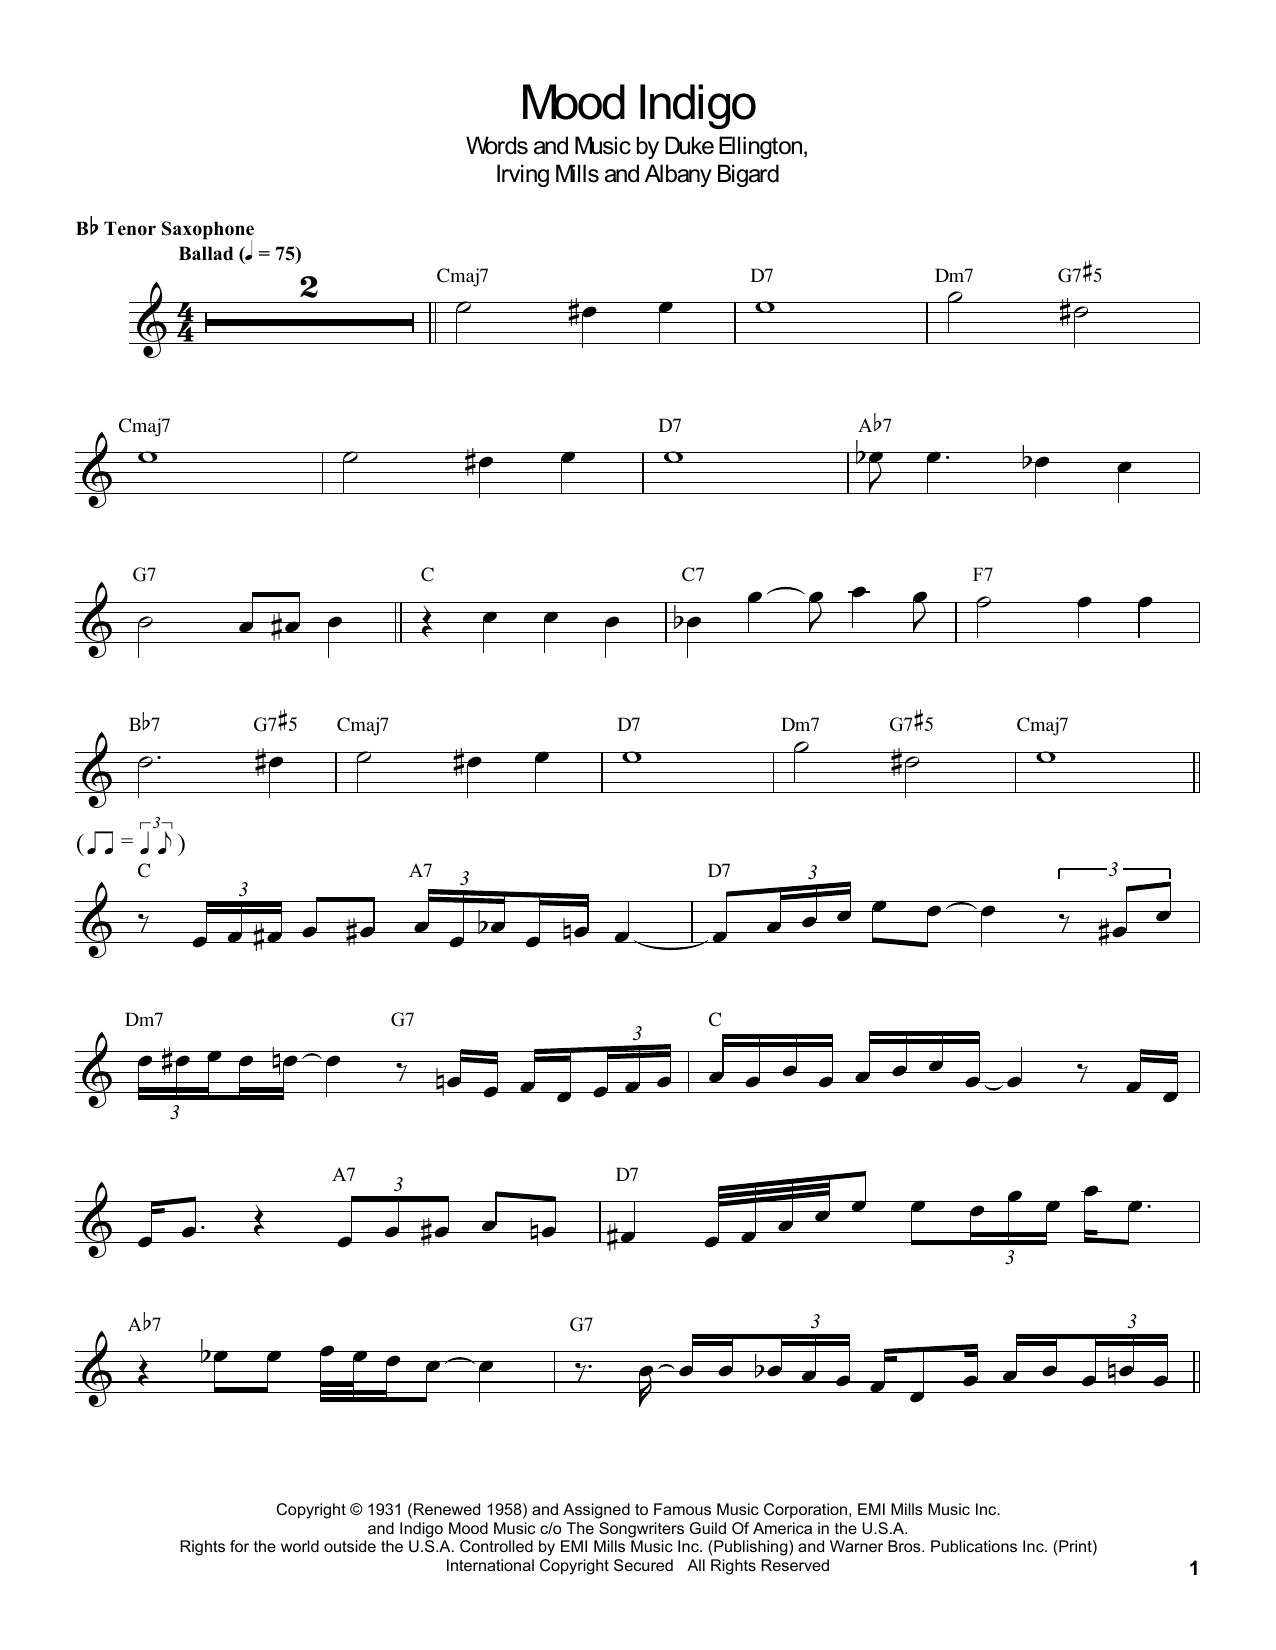 Coleman Hawkins Mood Indigo Sheet Music Notes & Chords for Tenor Sax Transcription - Download or Print PDF